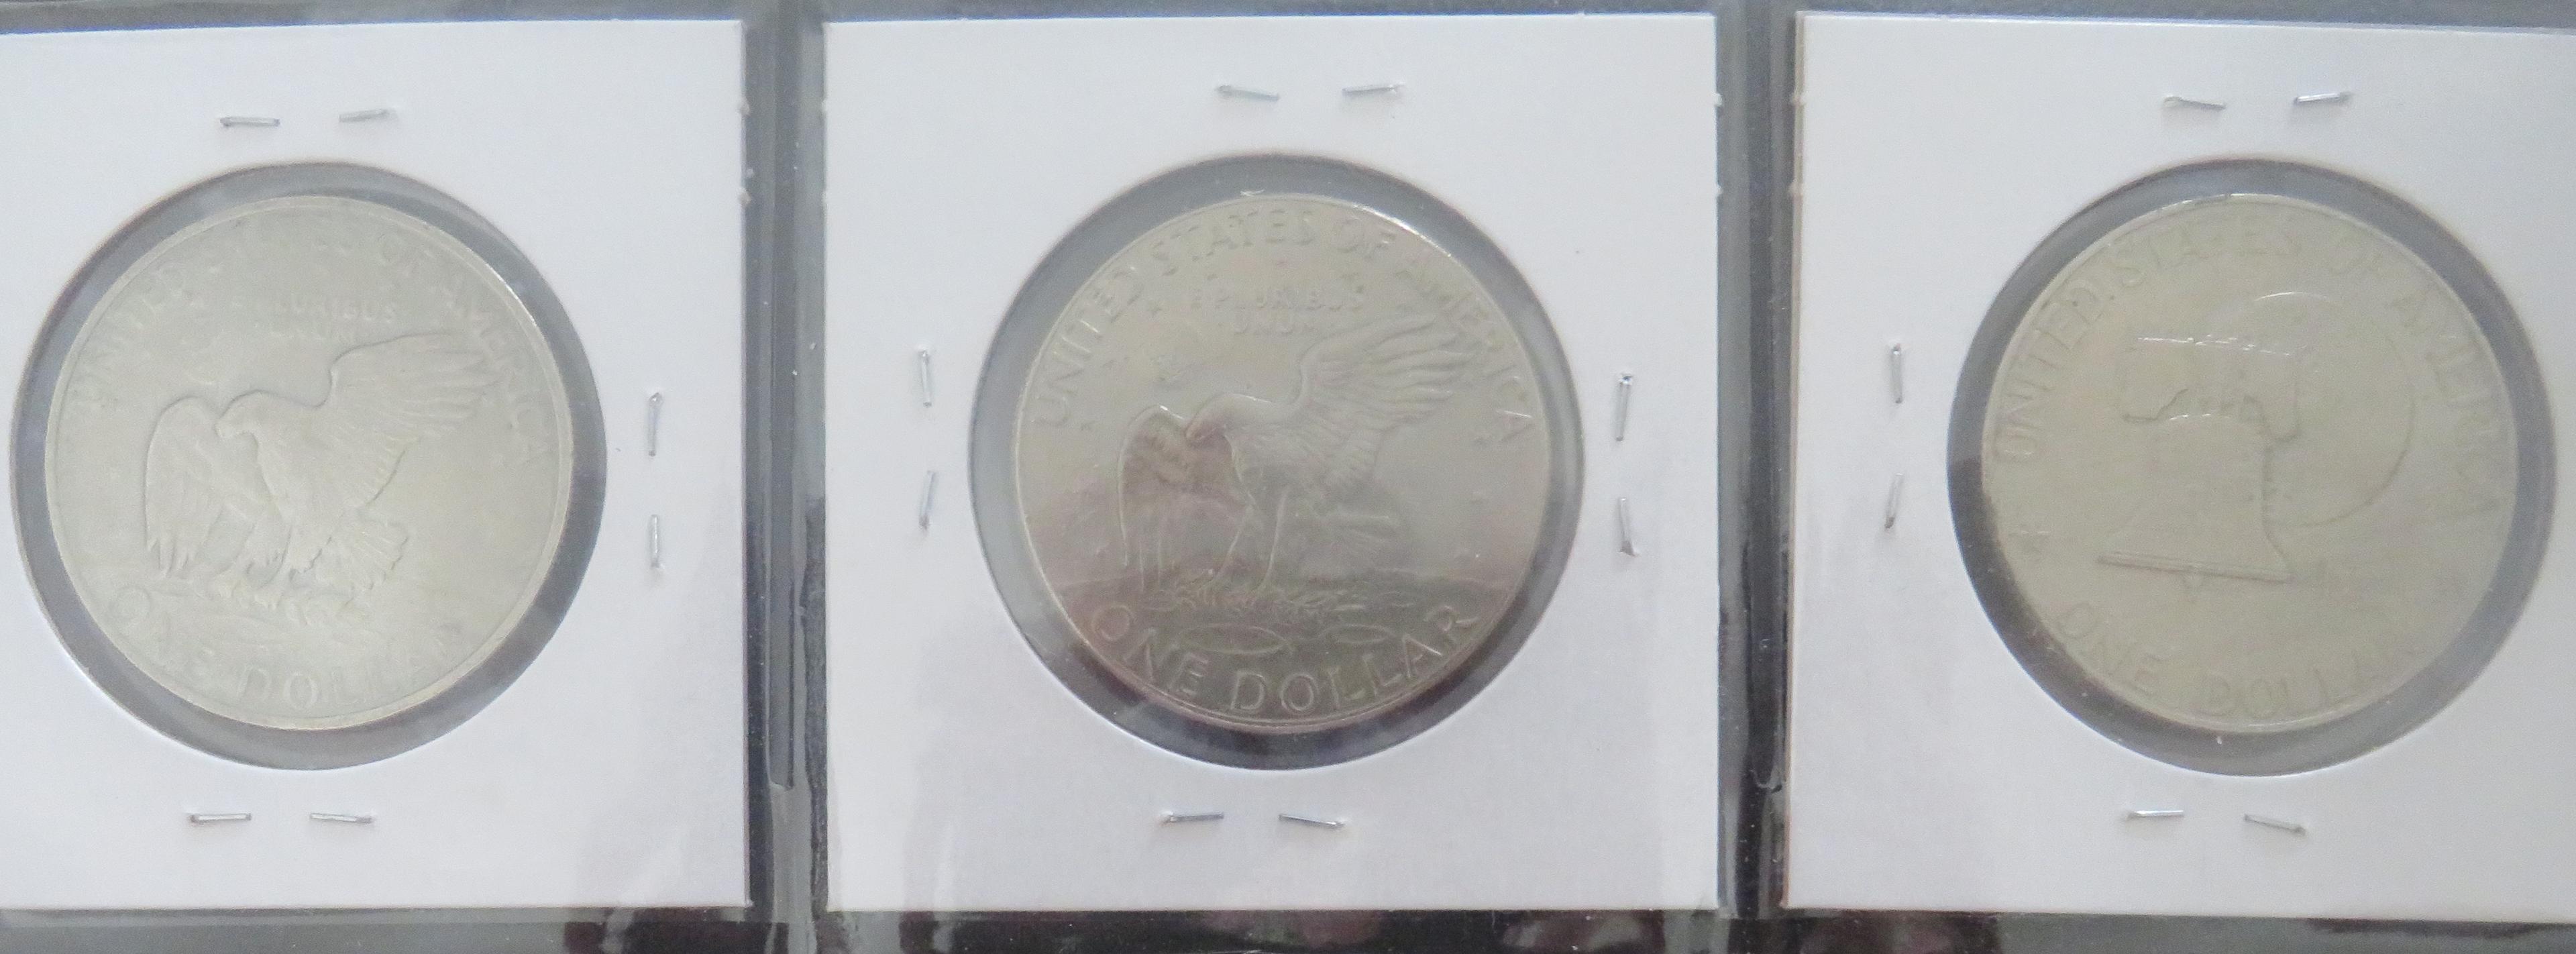 1971-D/ 1974-D/ 1976-P Eisenhower Dollars